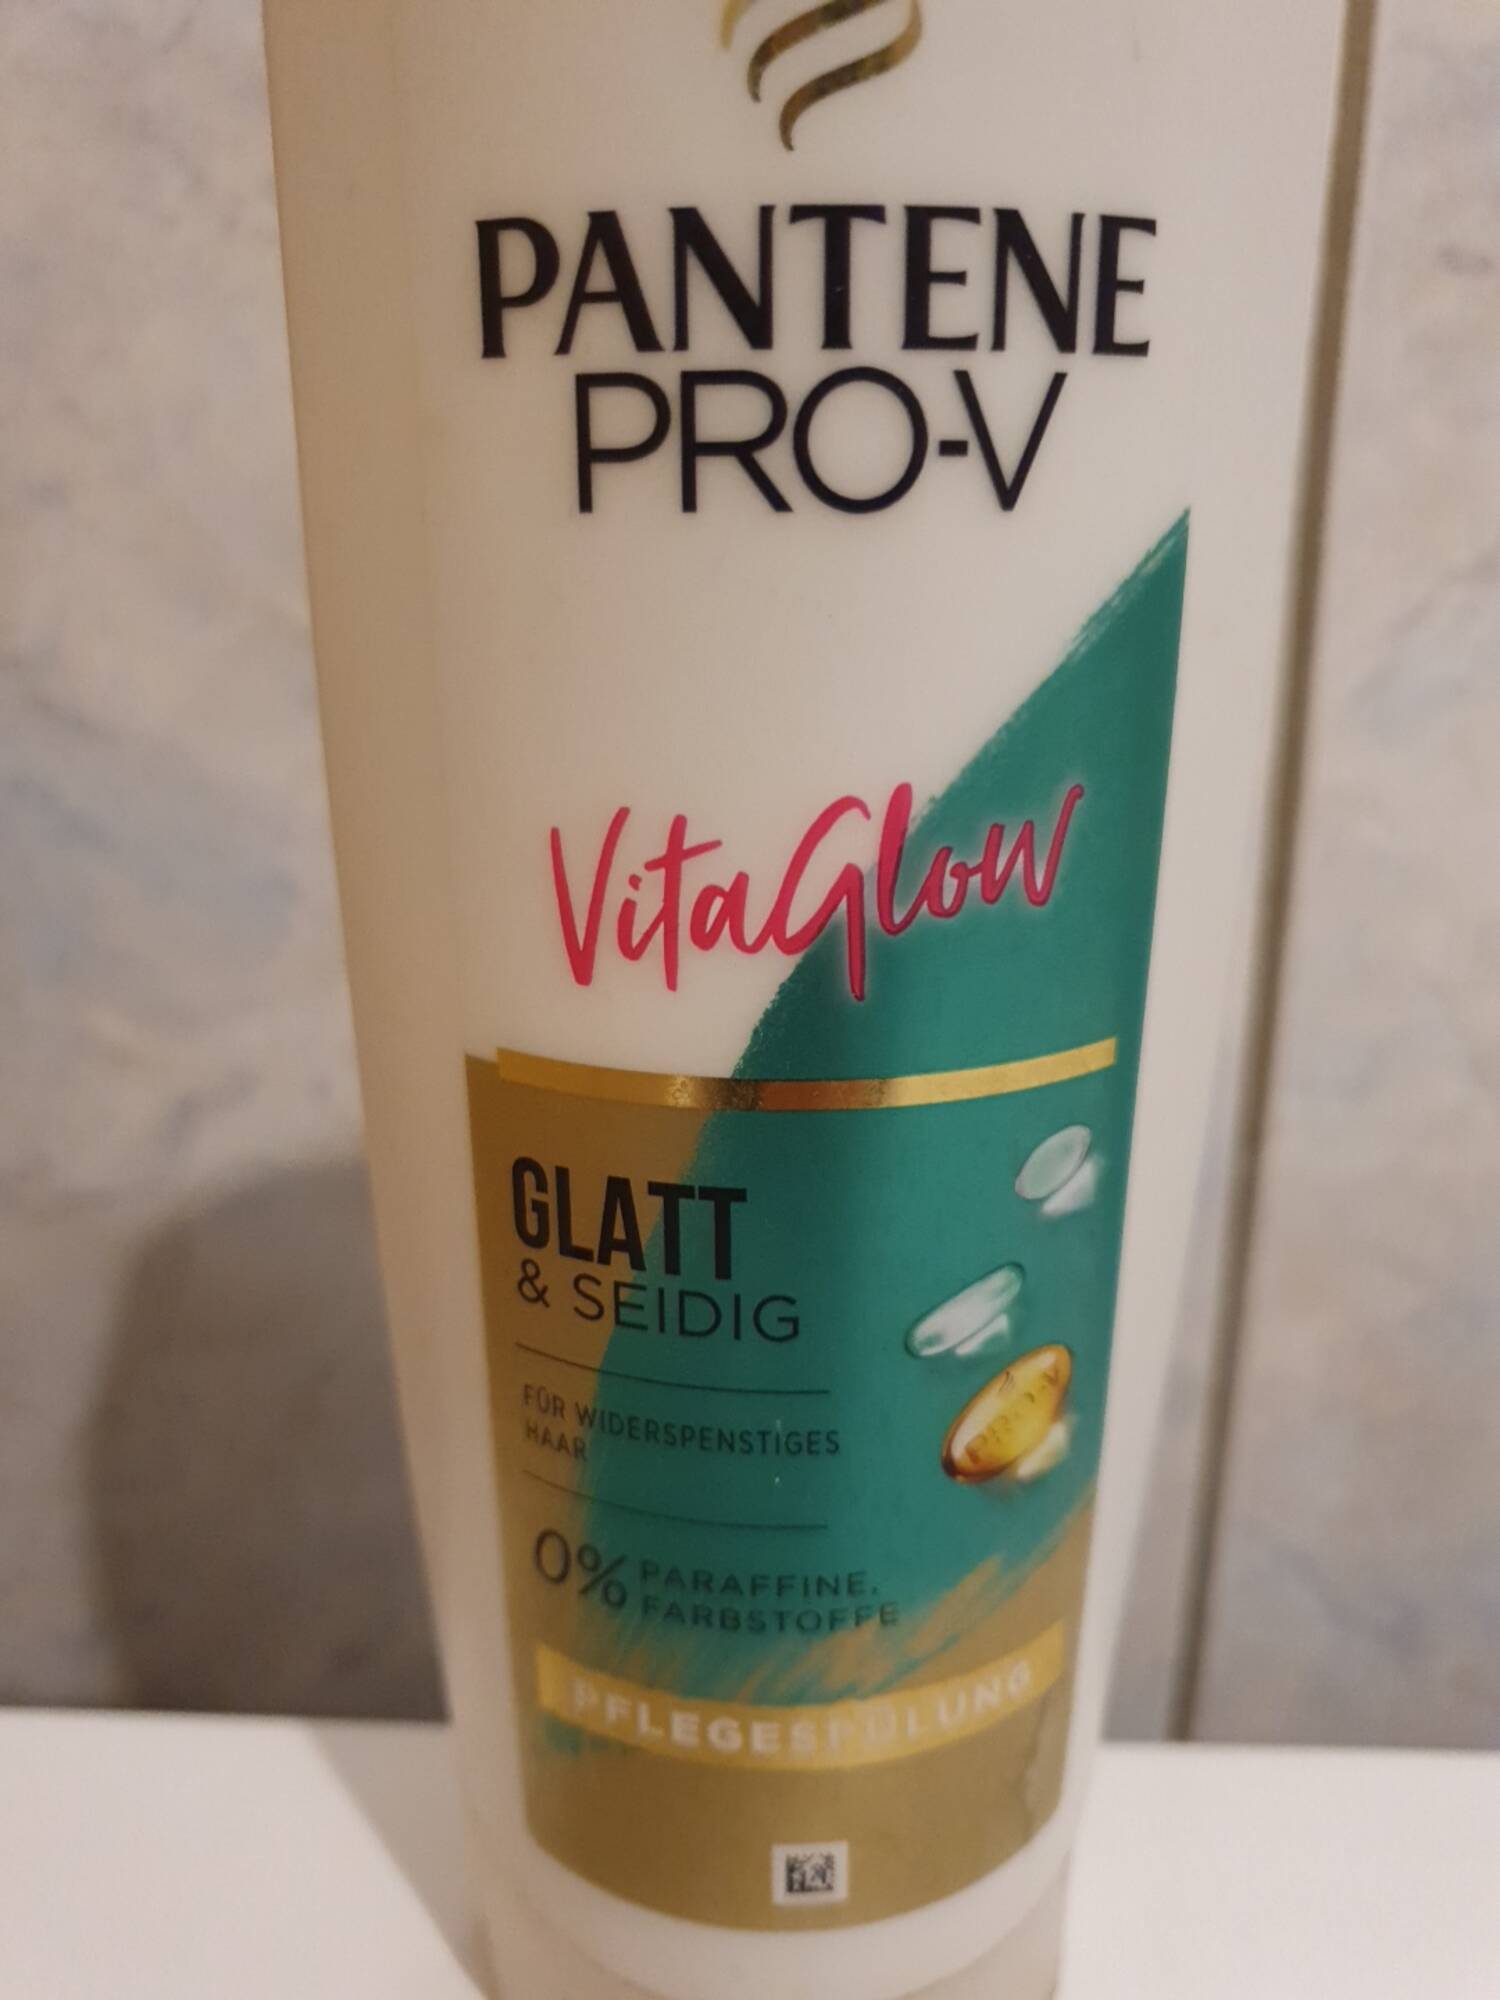 PANTENE PRO-V - Vitaglow - Glatt & seidig pflegespülung